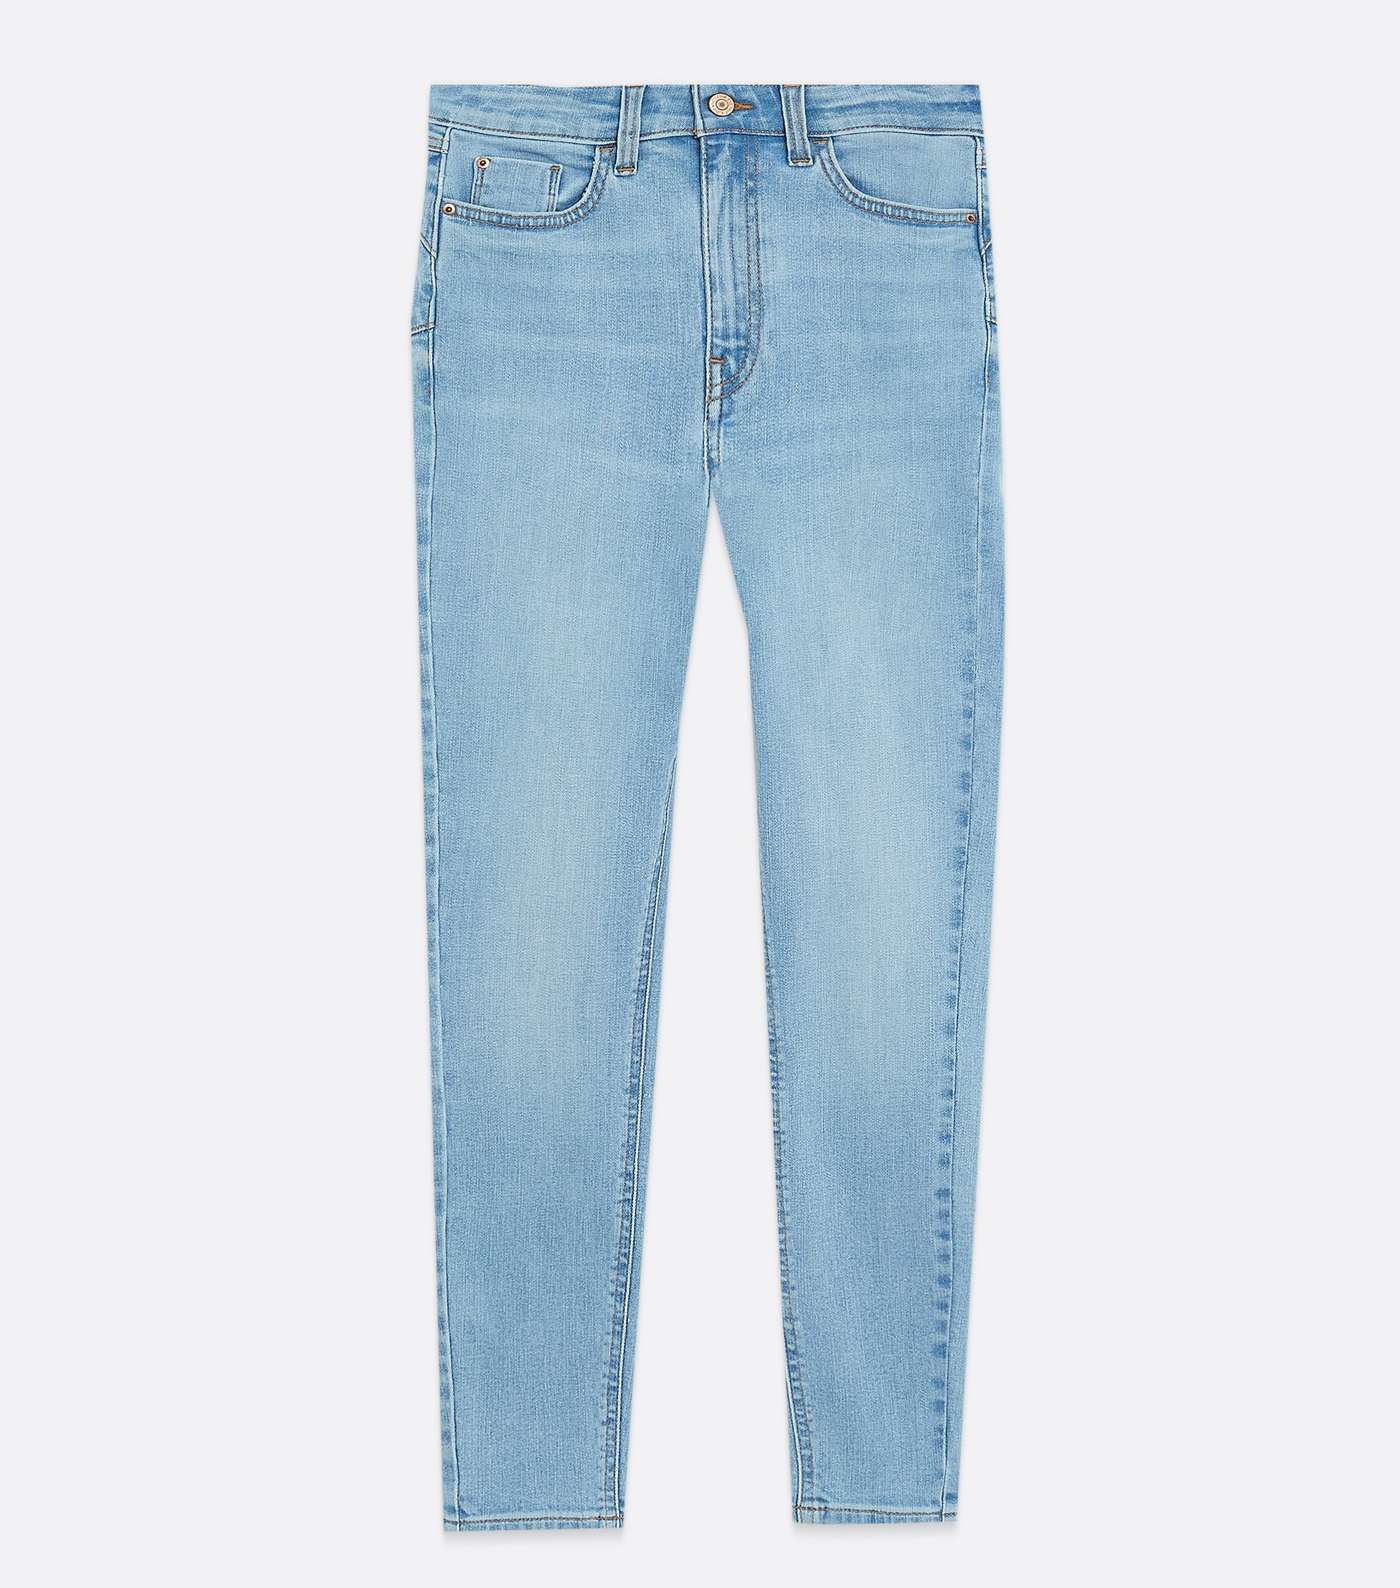 Petite Pale Blue Lift & Shape Jenna Skinny Jeans Image 5